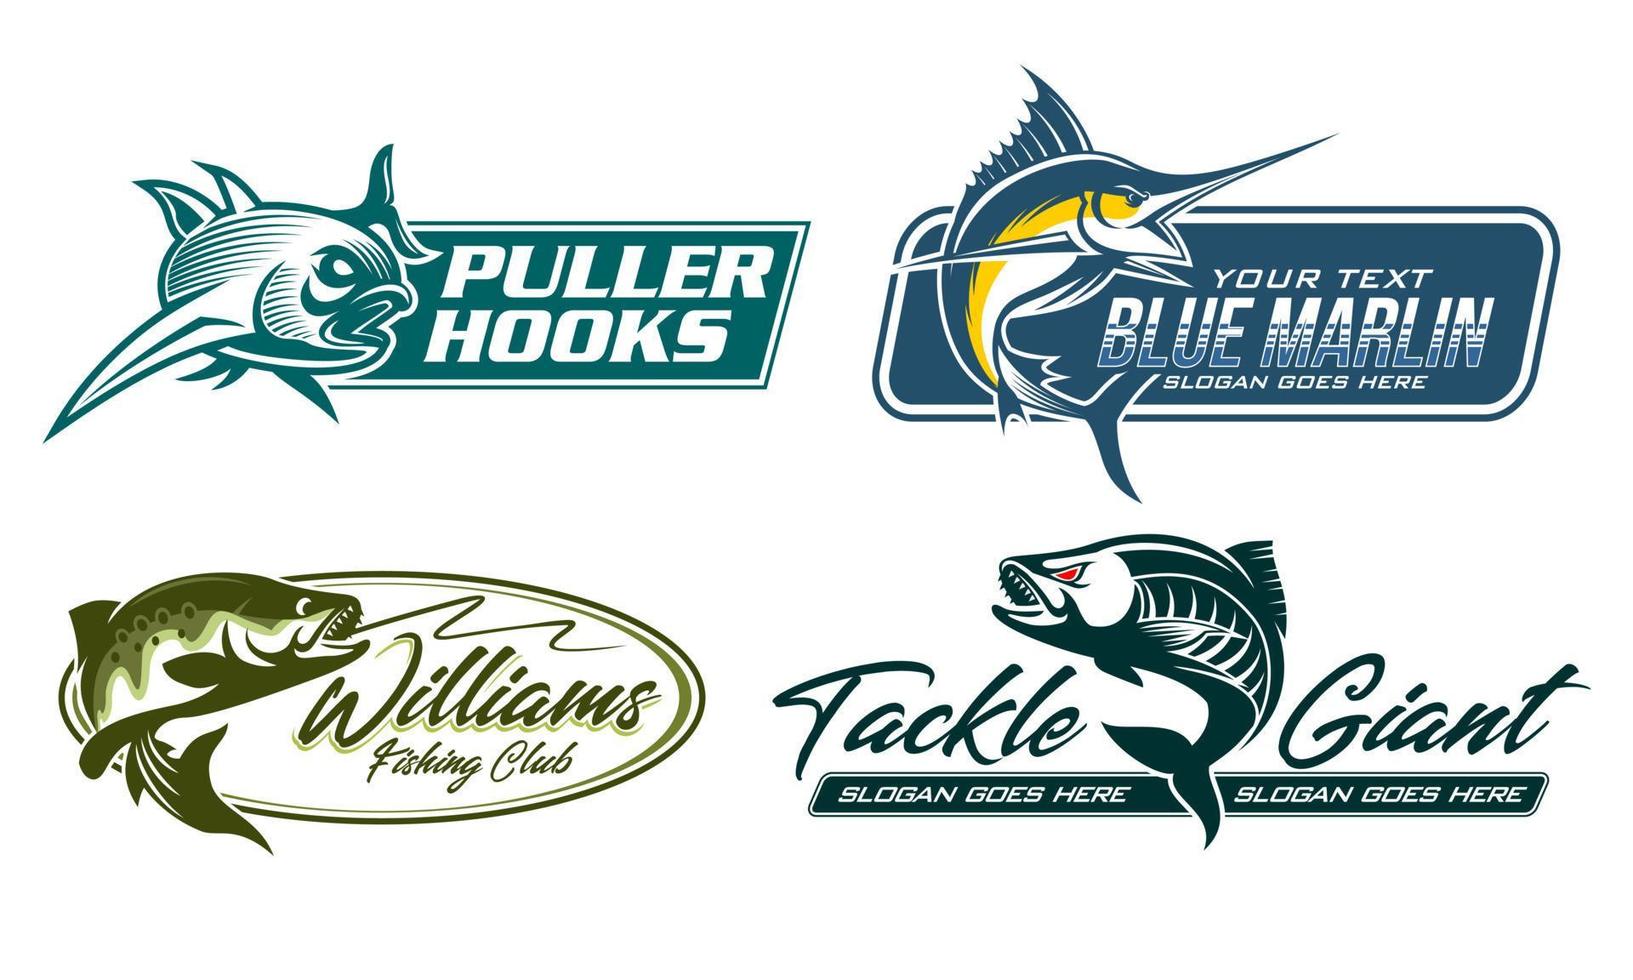 visvangst vis logo. reeks bundel van uniek en vers visvangst logo bundel sjabloon. Super goed naar gebruik net zo ieder visvangst bedrijf logo. vector